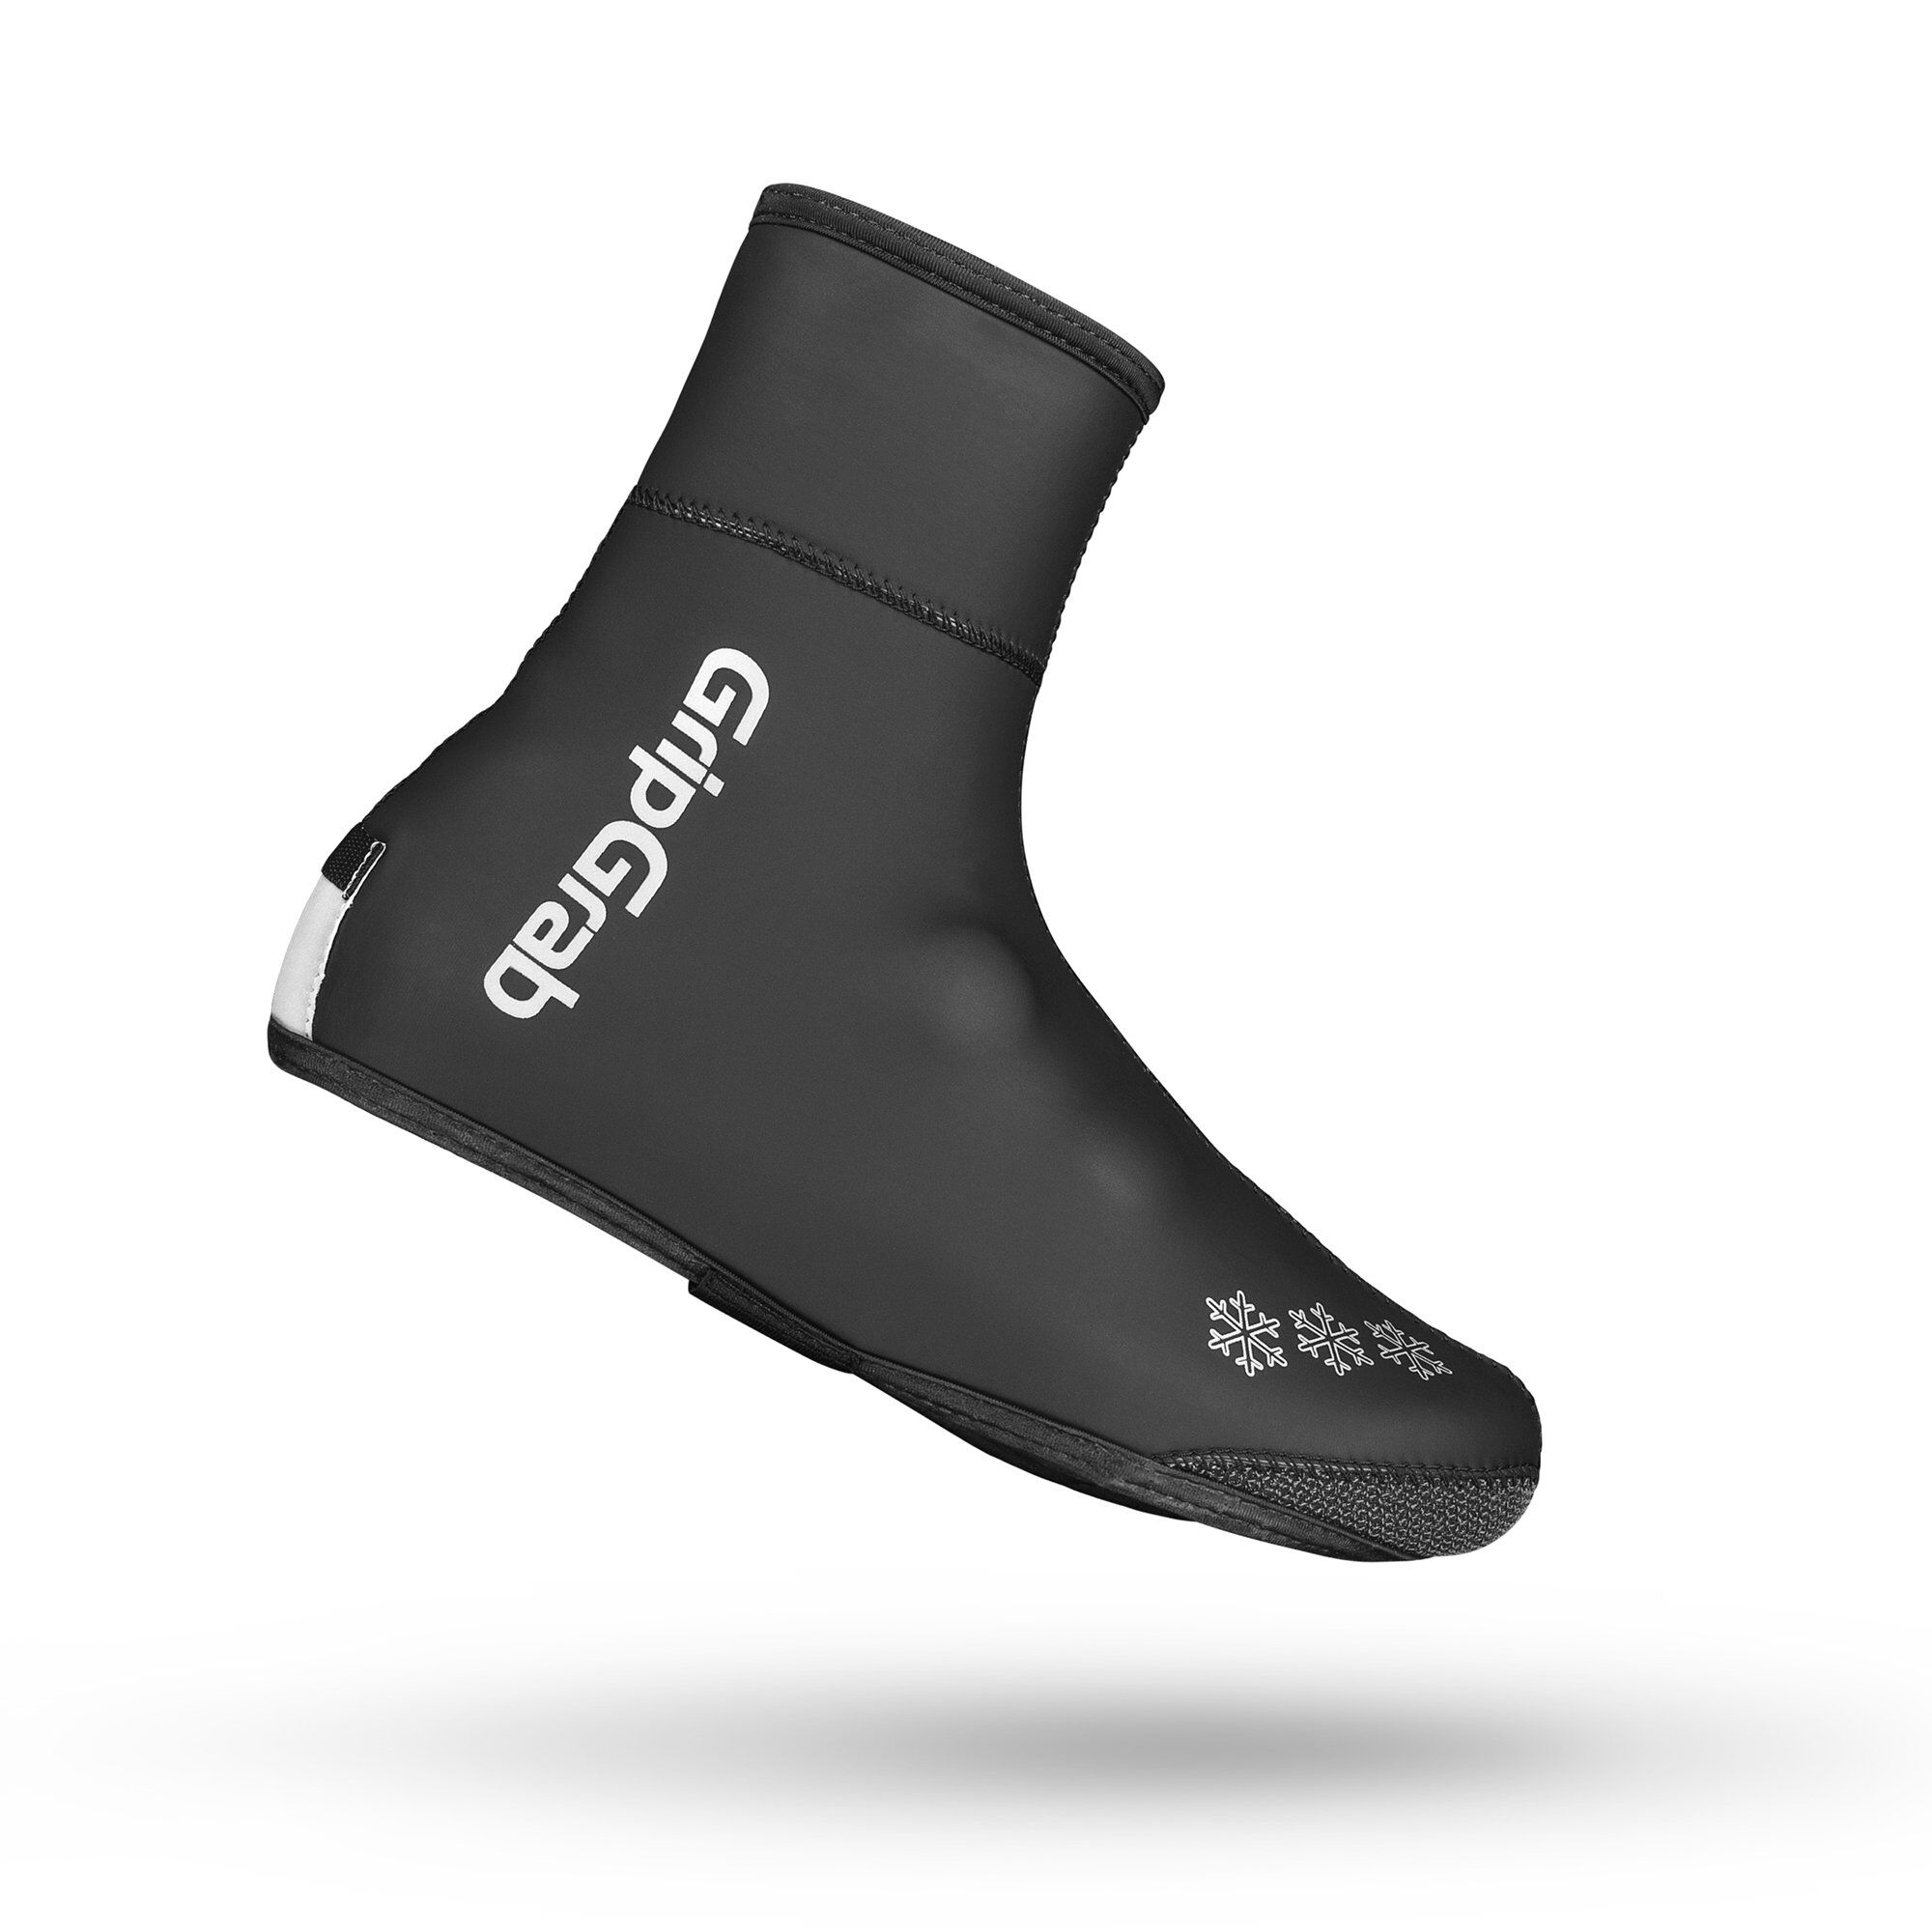 Grip Grab Arctic Waterproof Deep Winter Shoe Cover - Cycling overshoes